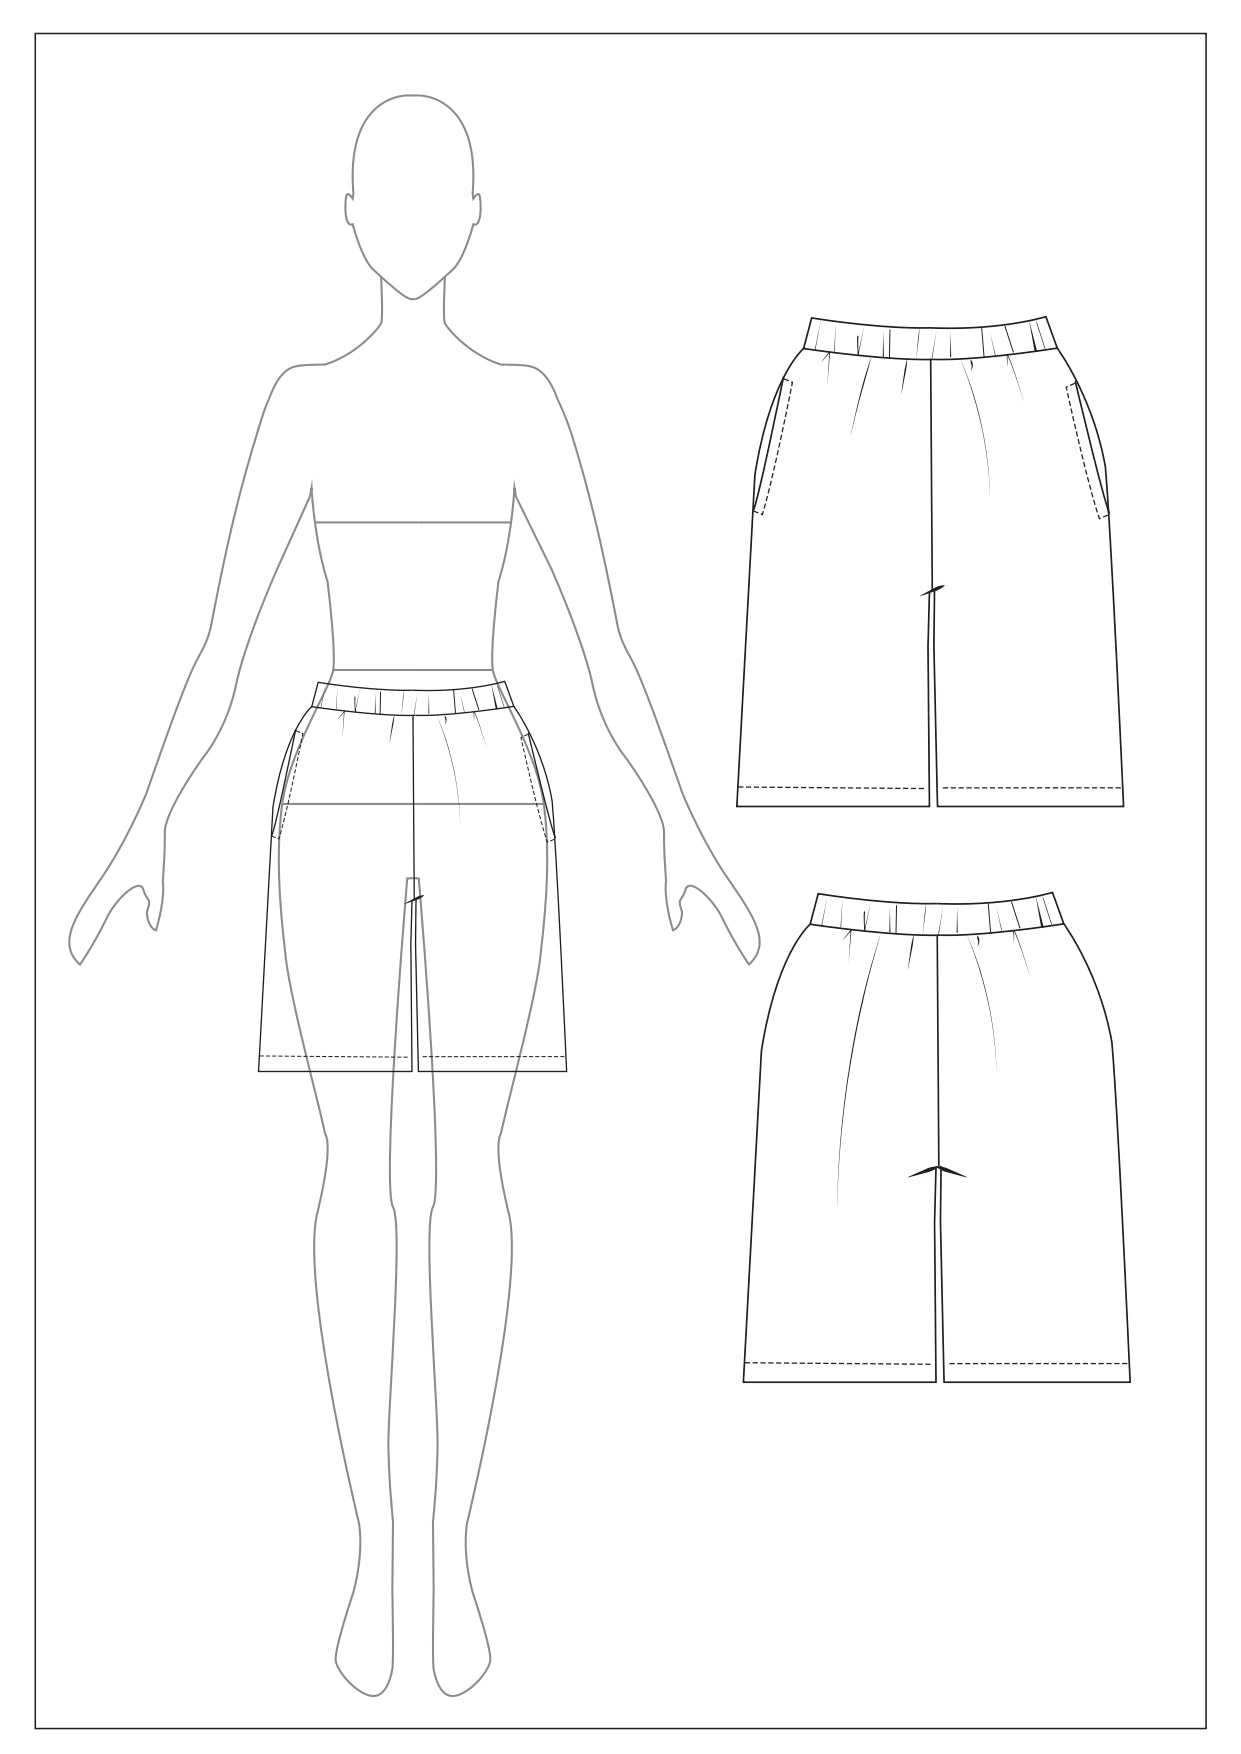 Kate’s Sewing Patterns Rose Shorts